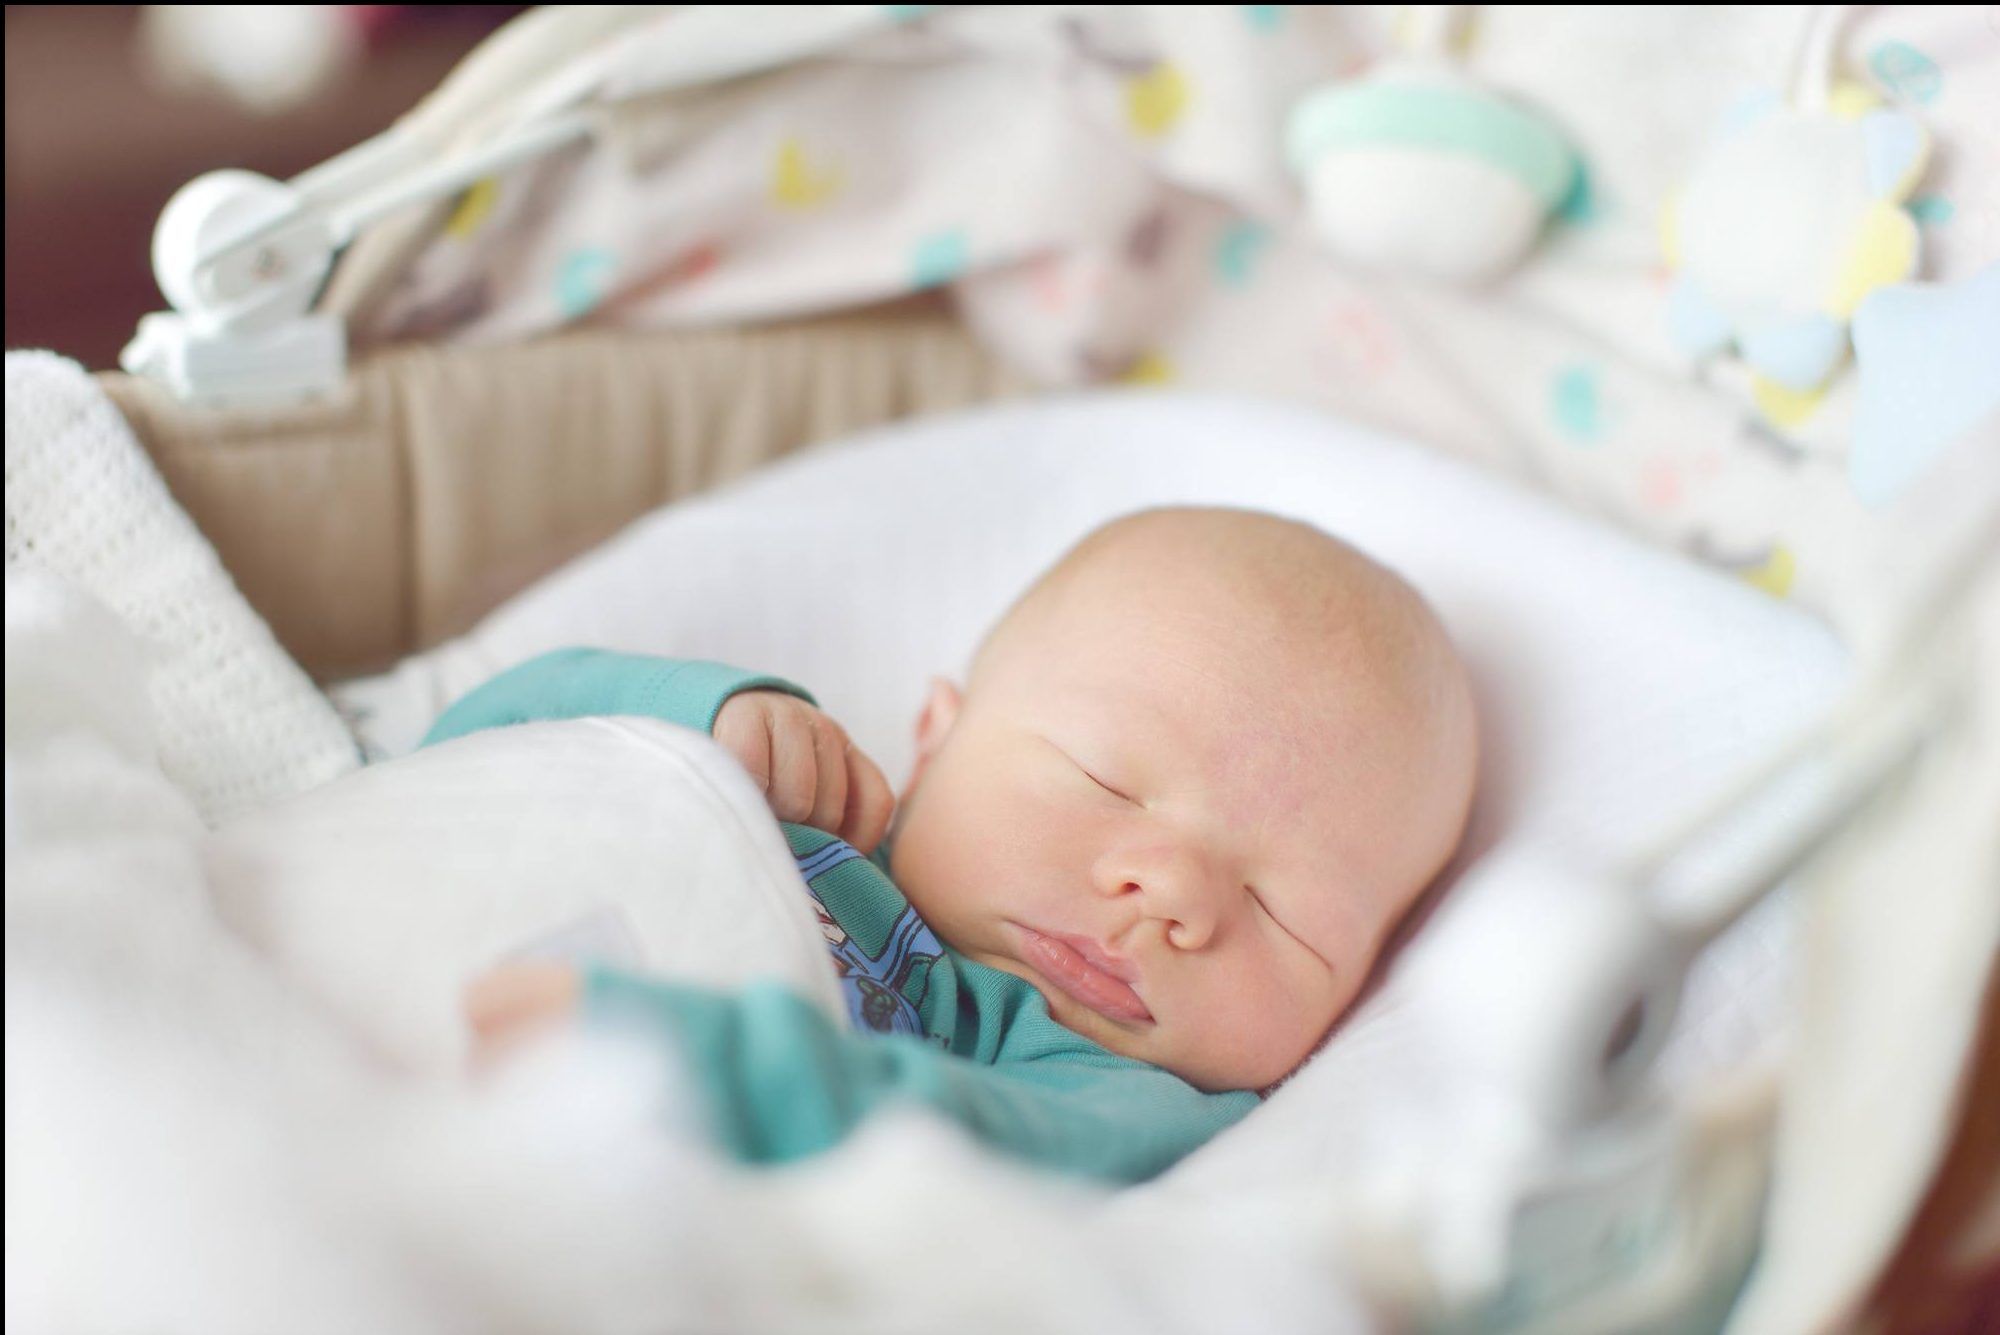 newborn hates sleeping in bassinet